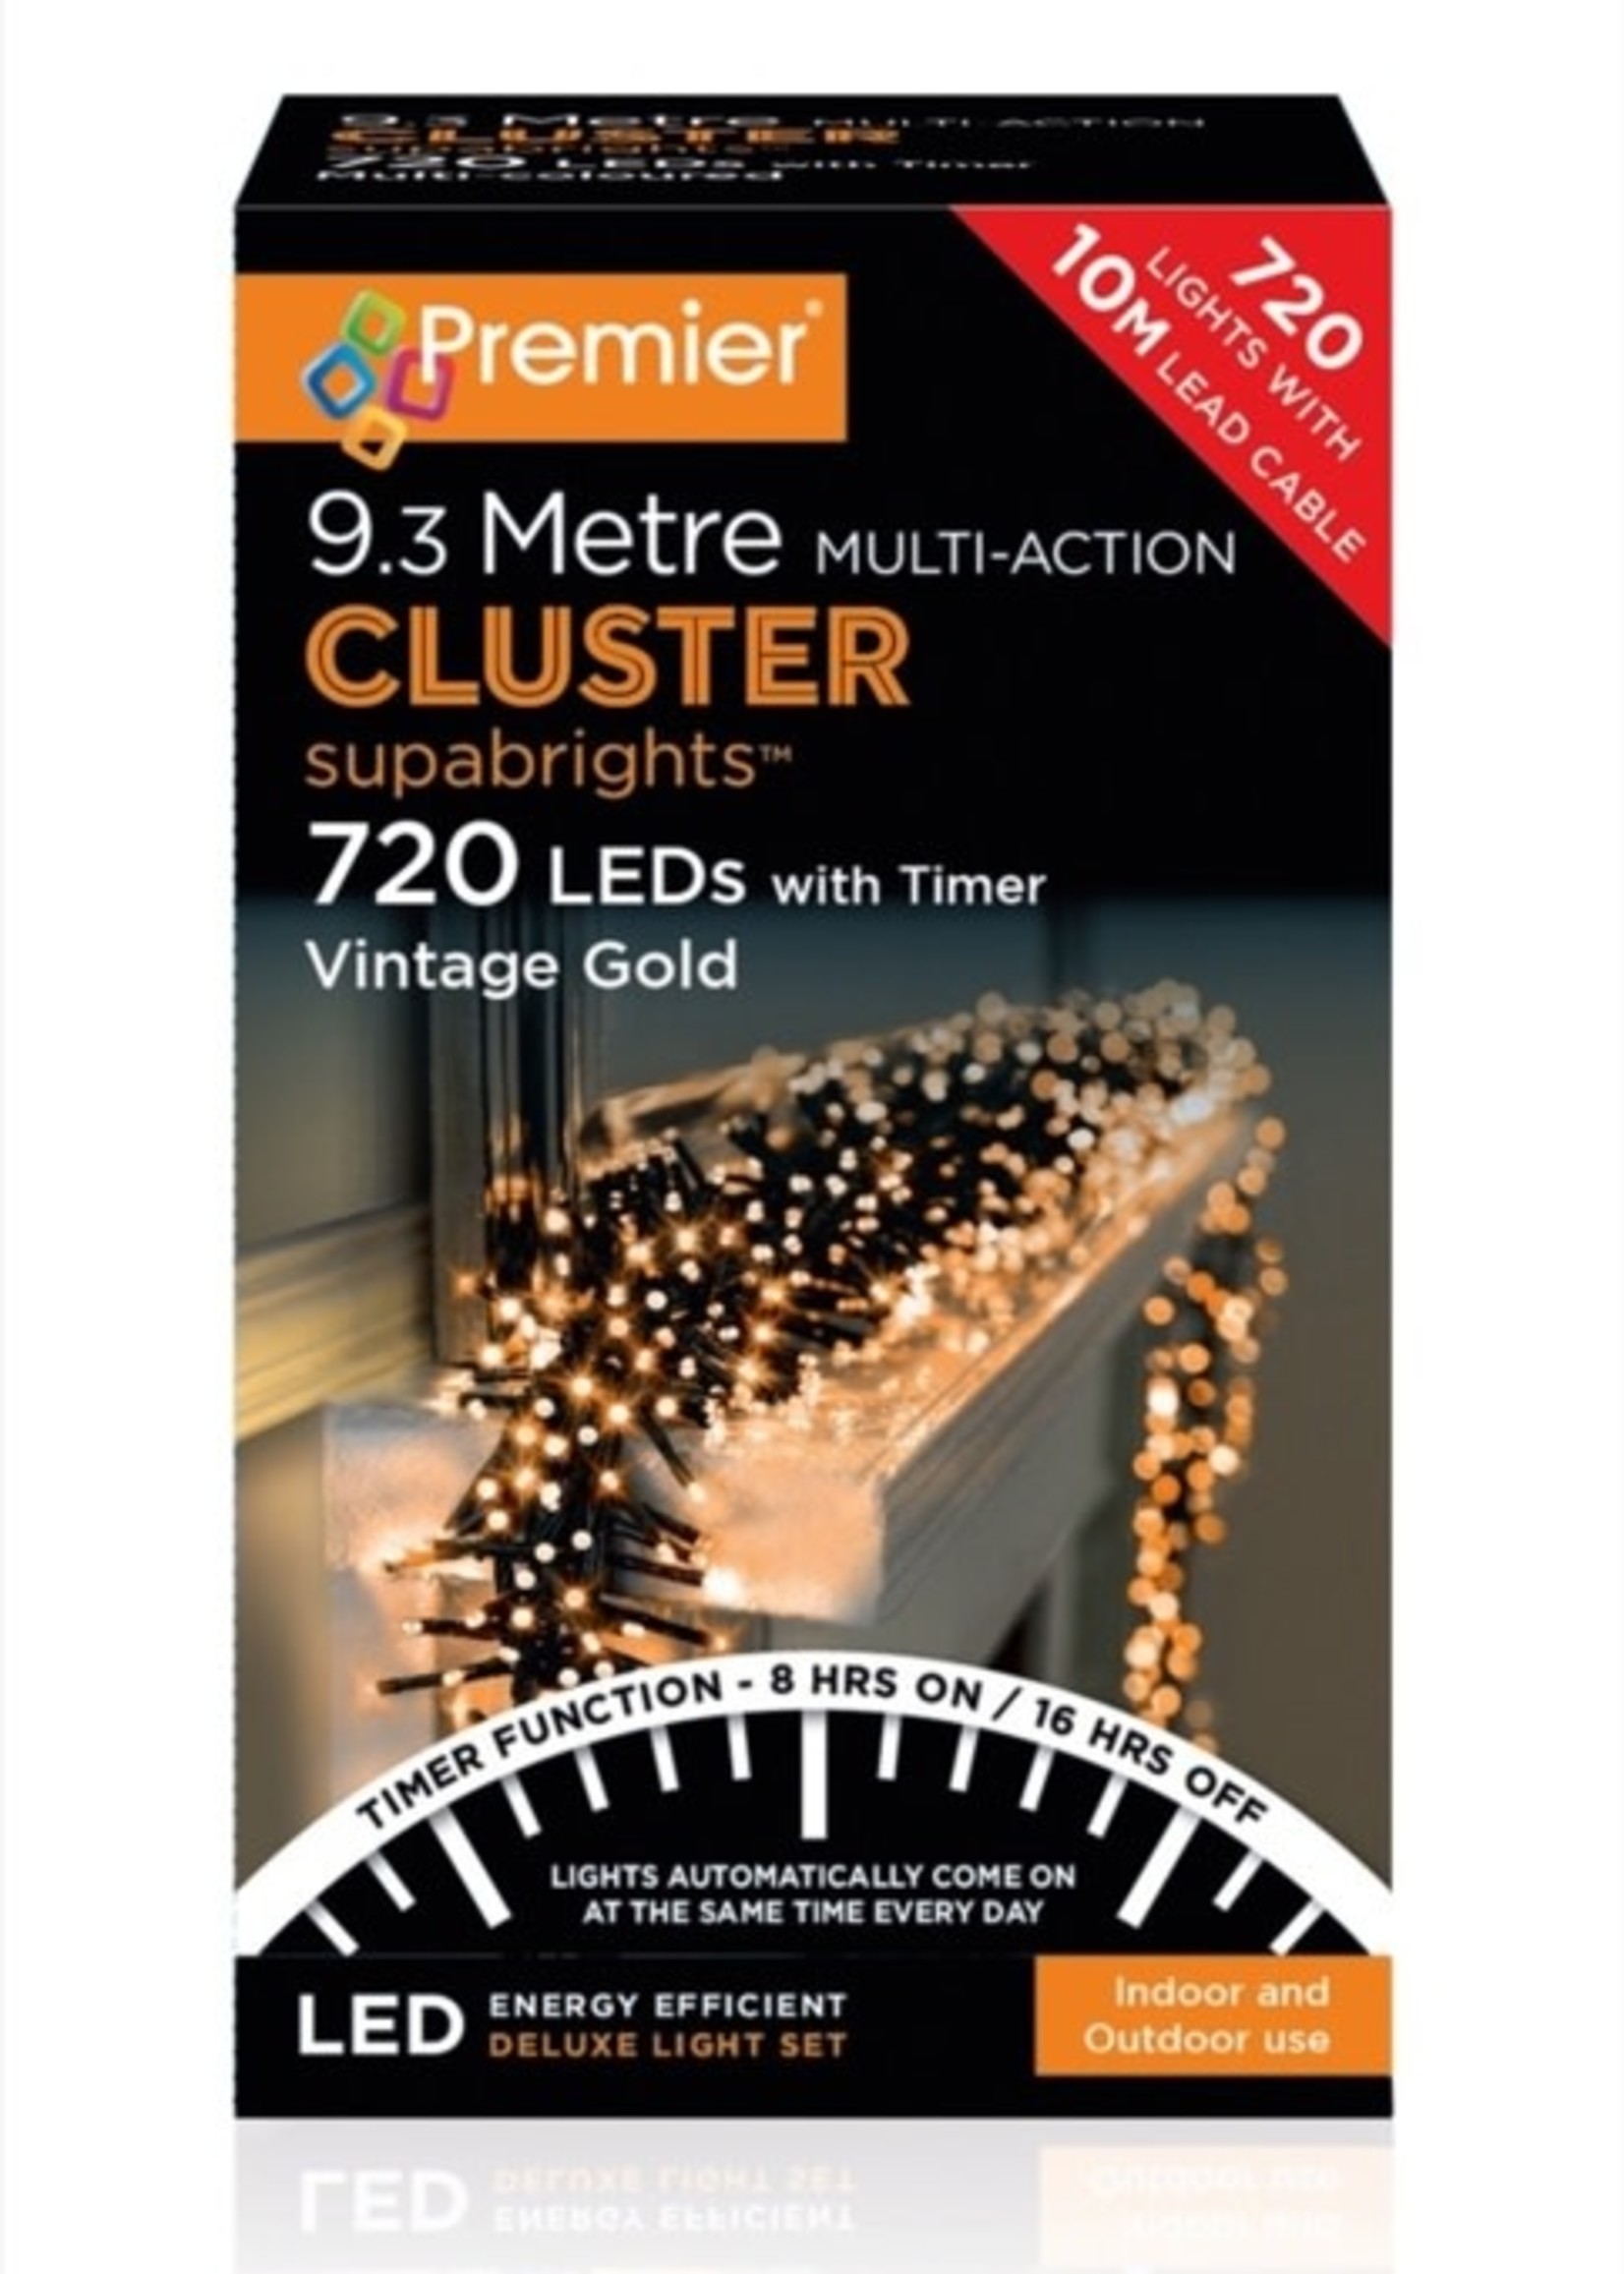 Premier Cluster Lights Indoor/Outdoor with Timer function